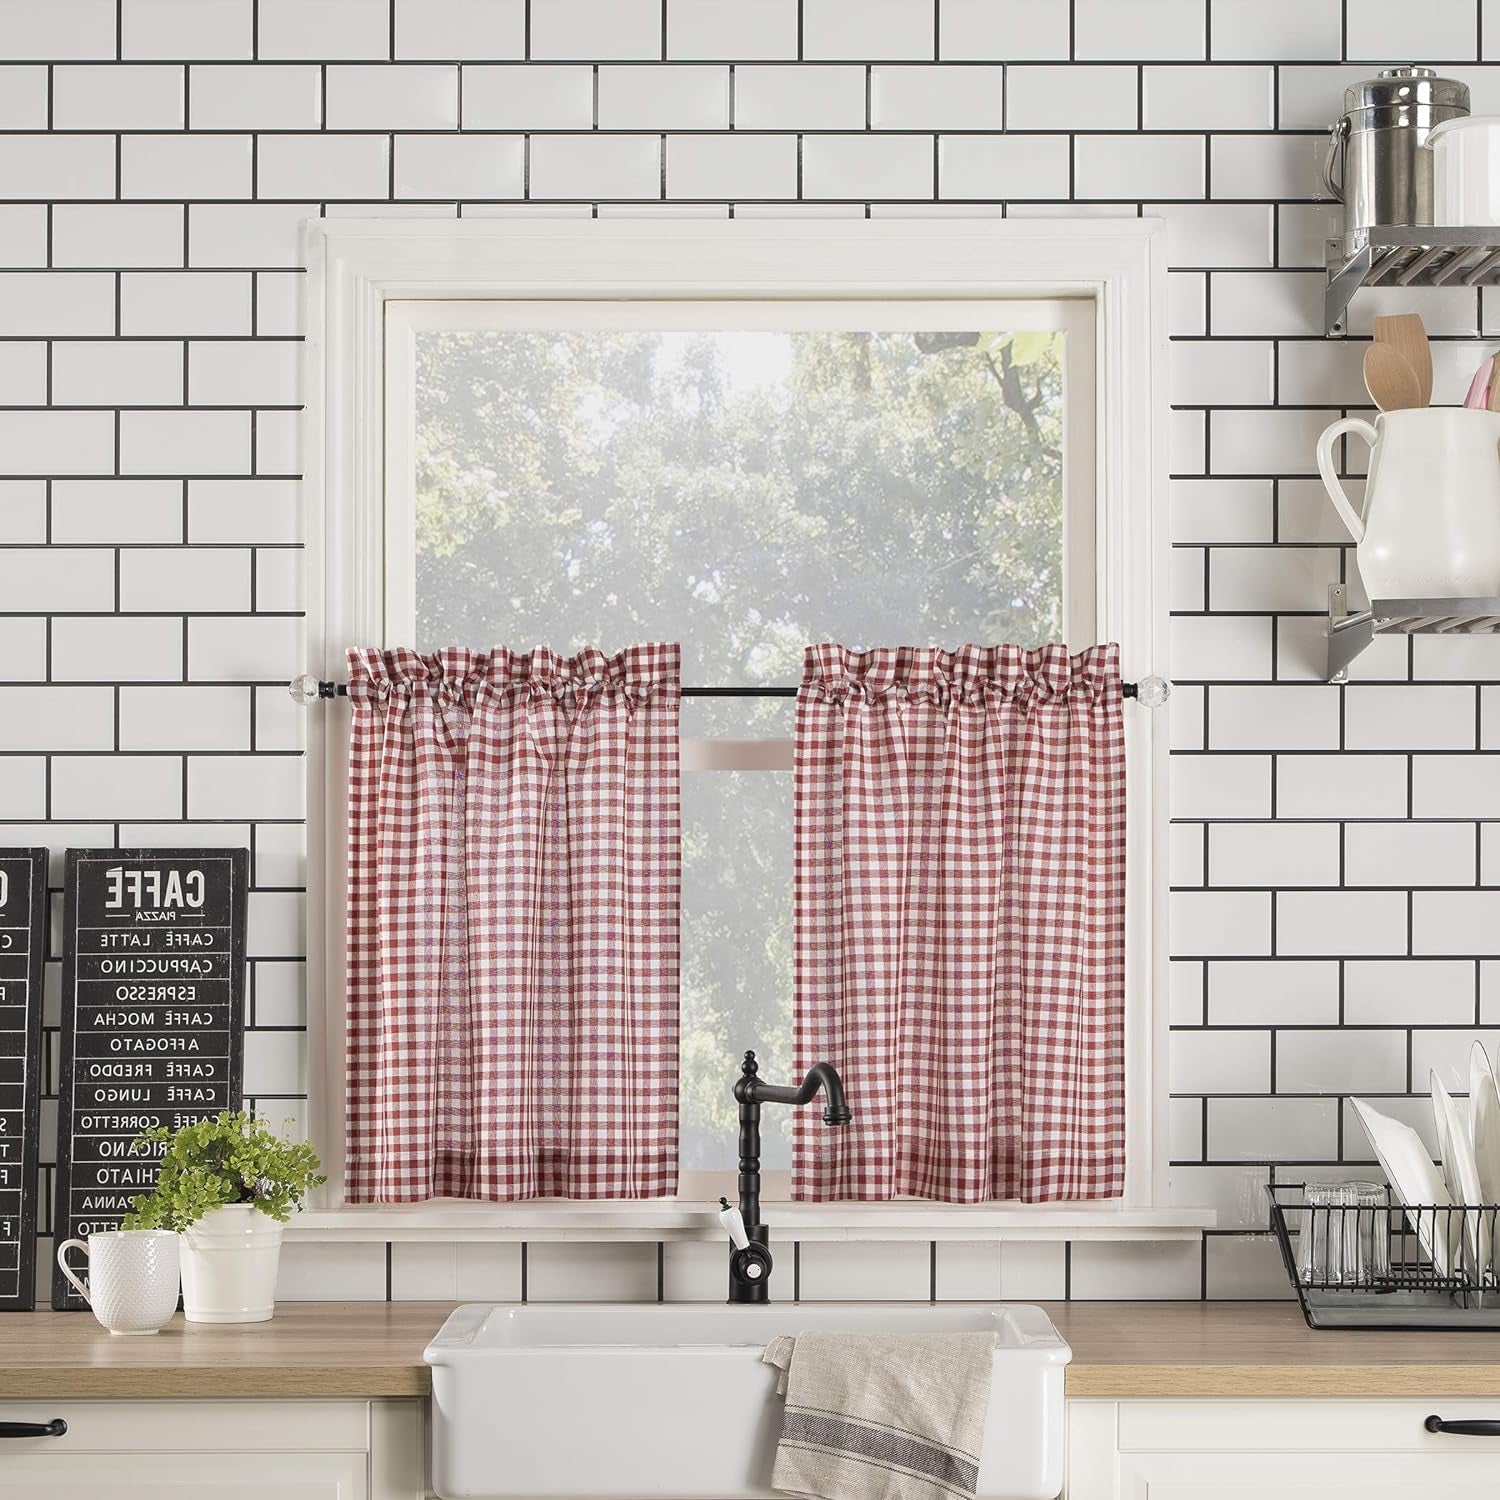 No. 918 Parkham Farmhouse Plaid Semi-Sheer Rod Pocket Kitchen Curtain Valance and Tiers Set, 54" X 24", Red/White